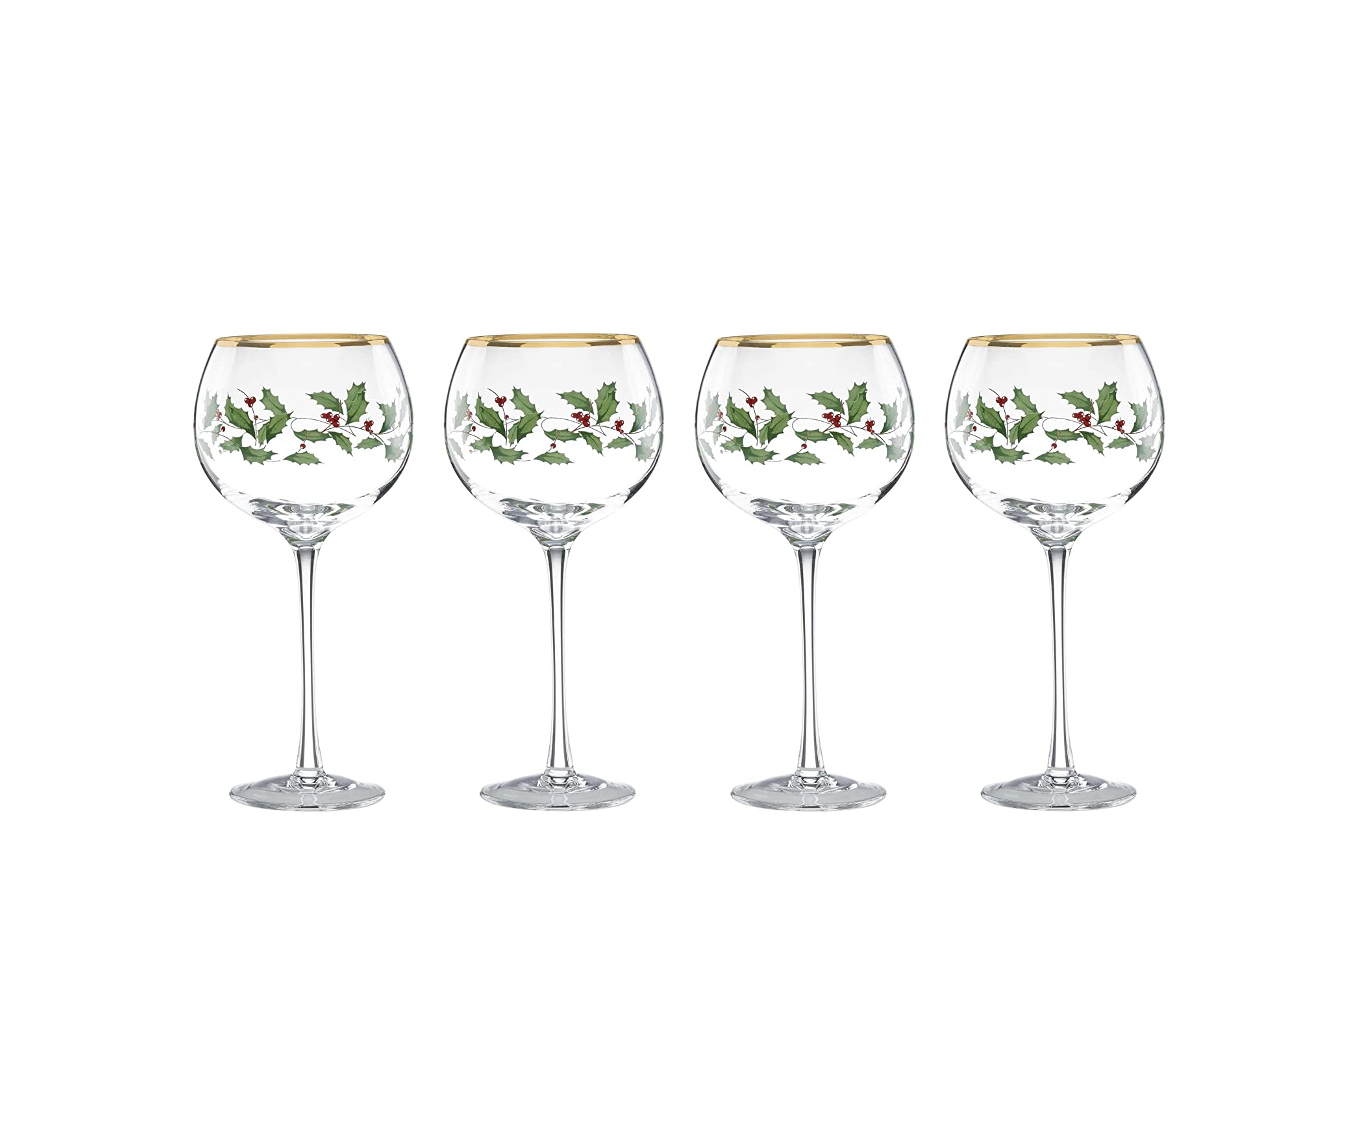 Bandesun Wine Glasses Set of 6 - Beads Goblet Glass